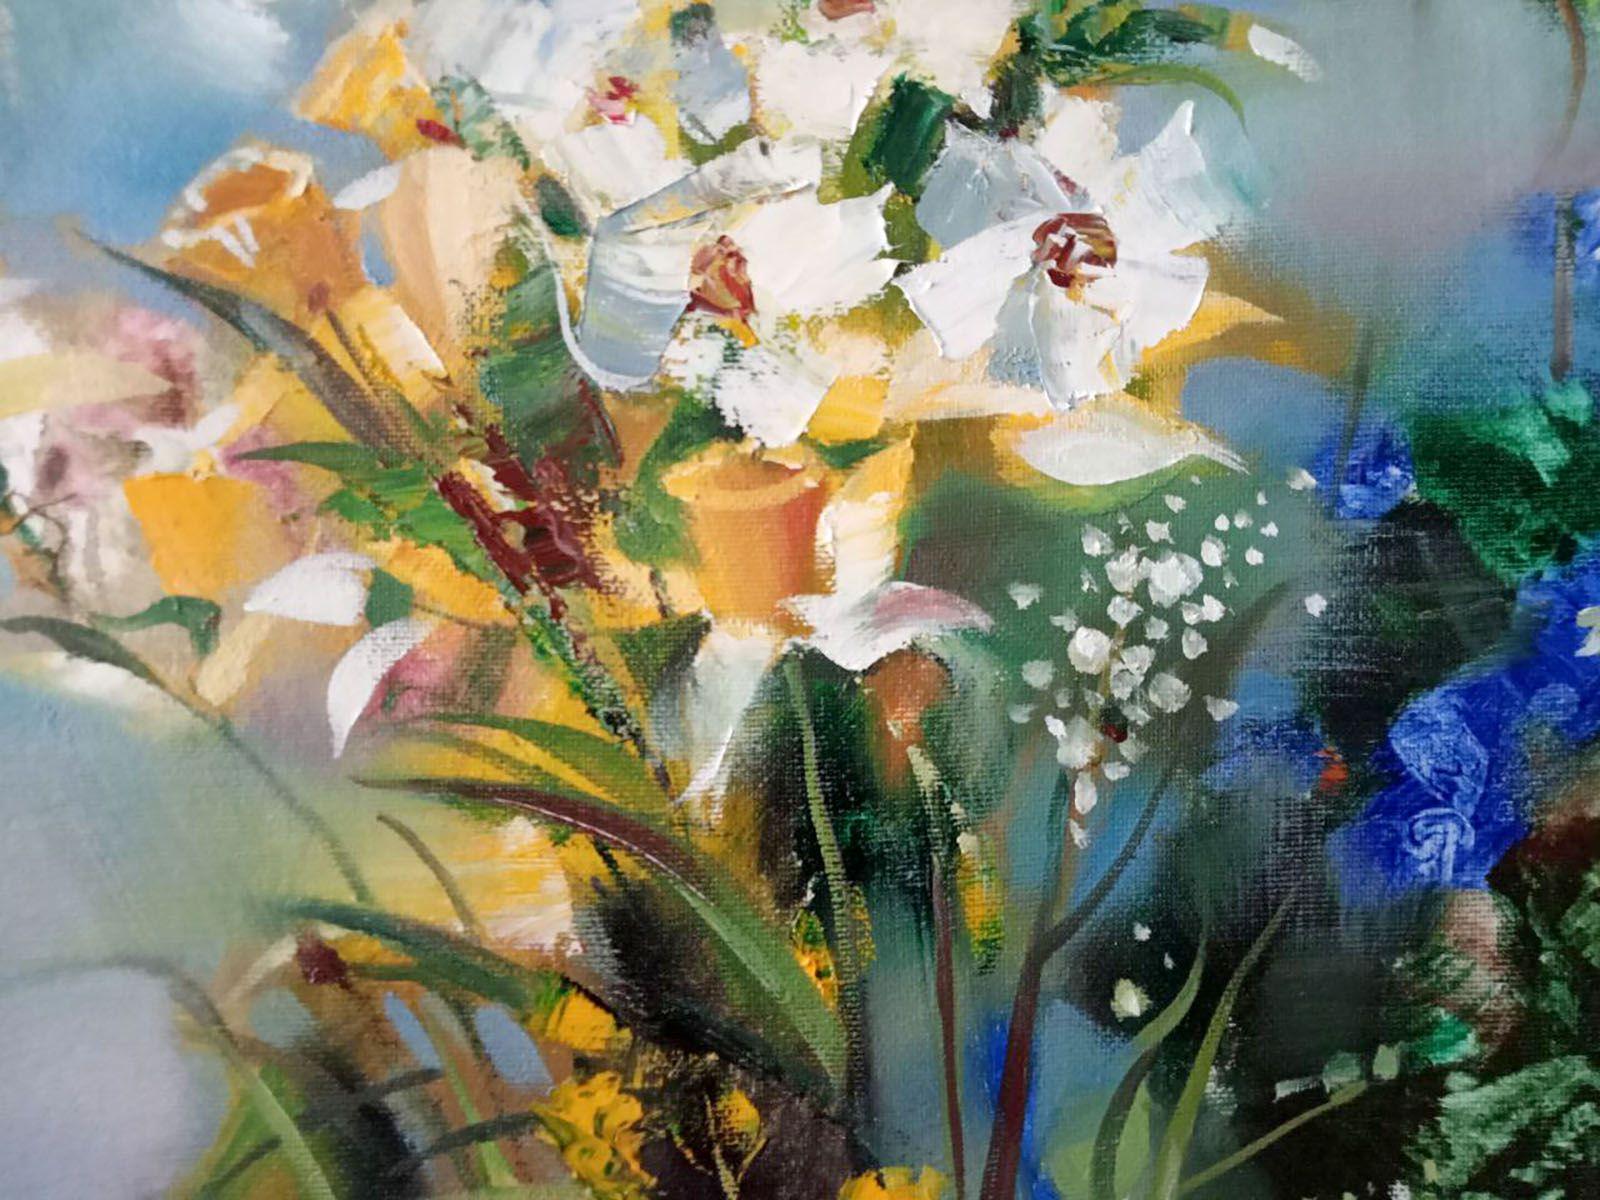 Artist: Anatoly Borisovich Tarabanov
Work: Original oil painting, handmade artwork, one of a kind 
Medium: Oil on Canvas 
Year: 2020
Style: Impressionism
Title: Breath of Spring
Size: 23.5